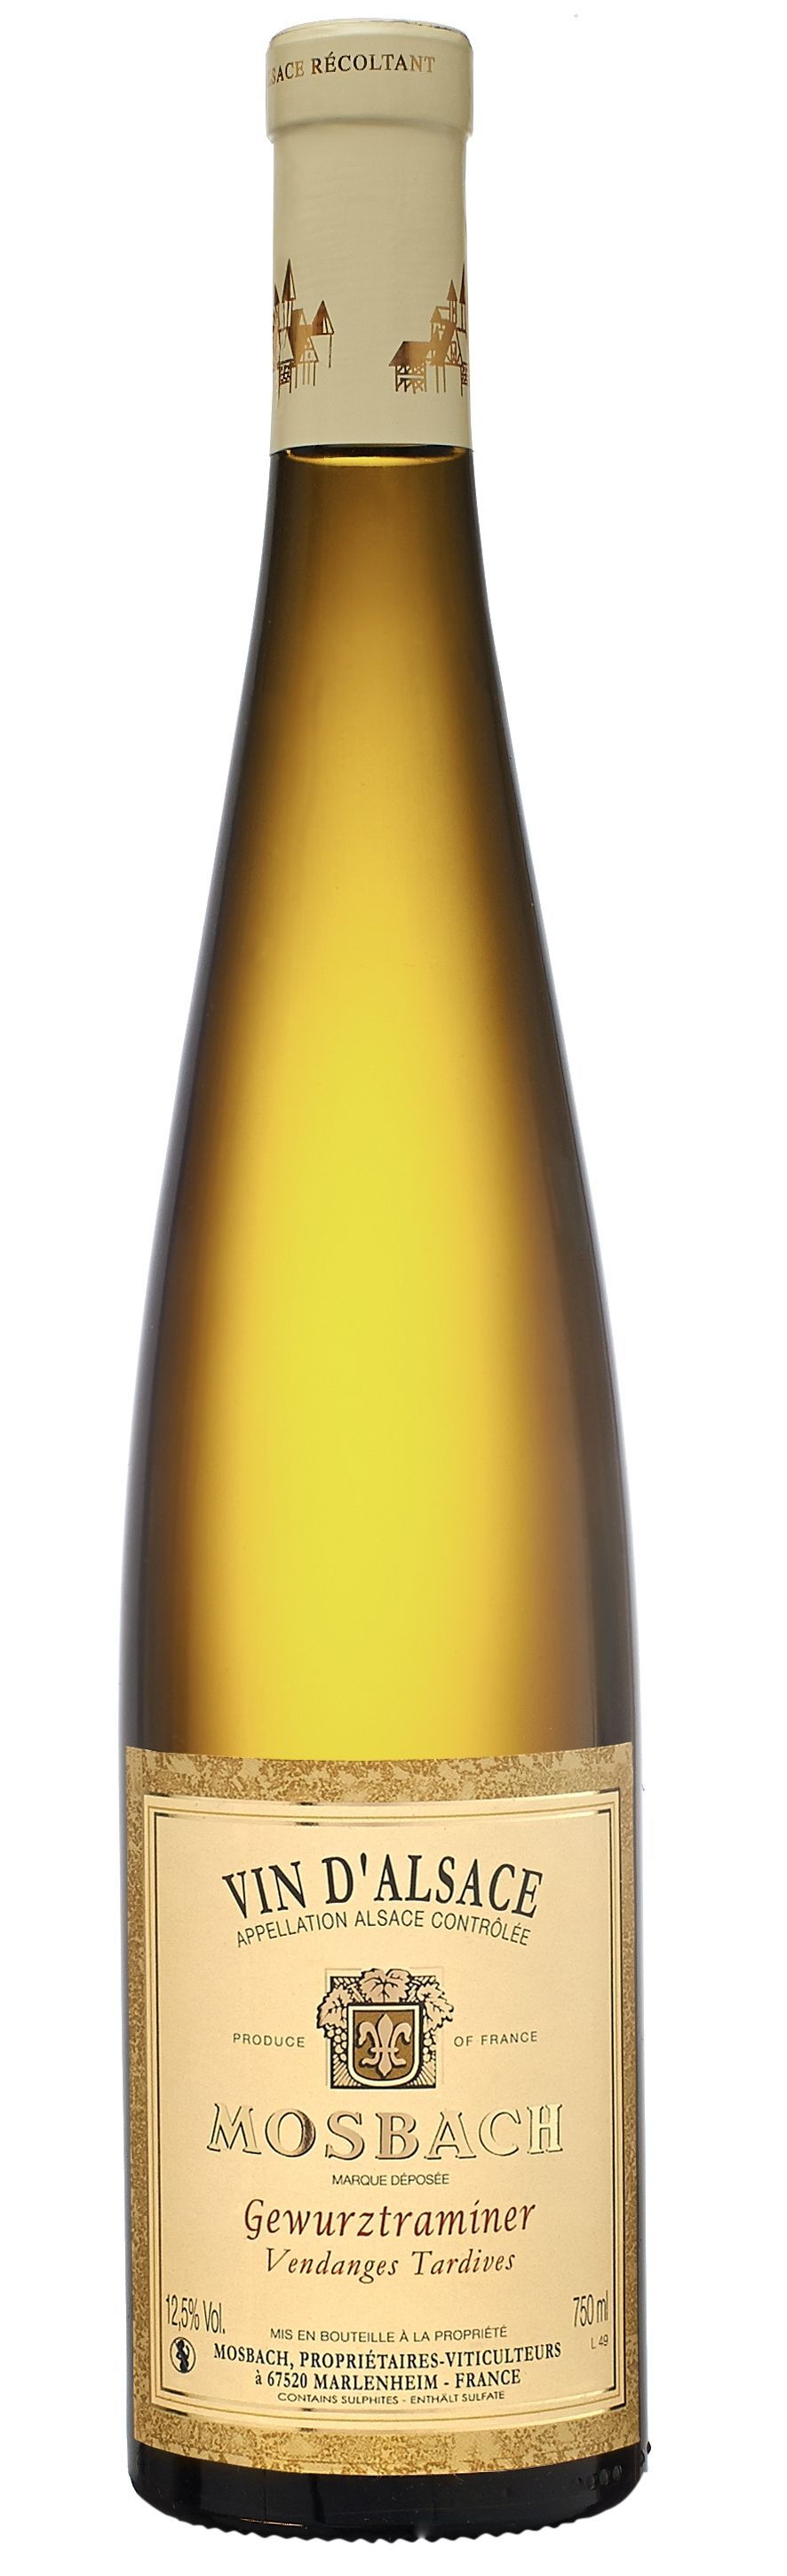 GFA MOSBACH (MARLENHEIM) Gewurztraminer Vendanges Tardives Mosbach, White, 2018, Alsace ou Vin d'Alsace. Bottle image